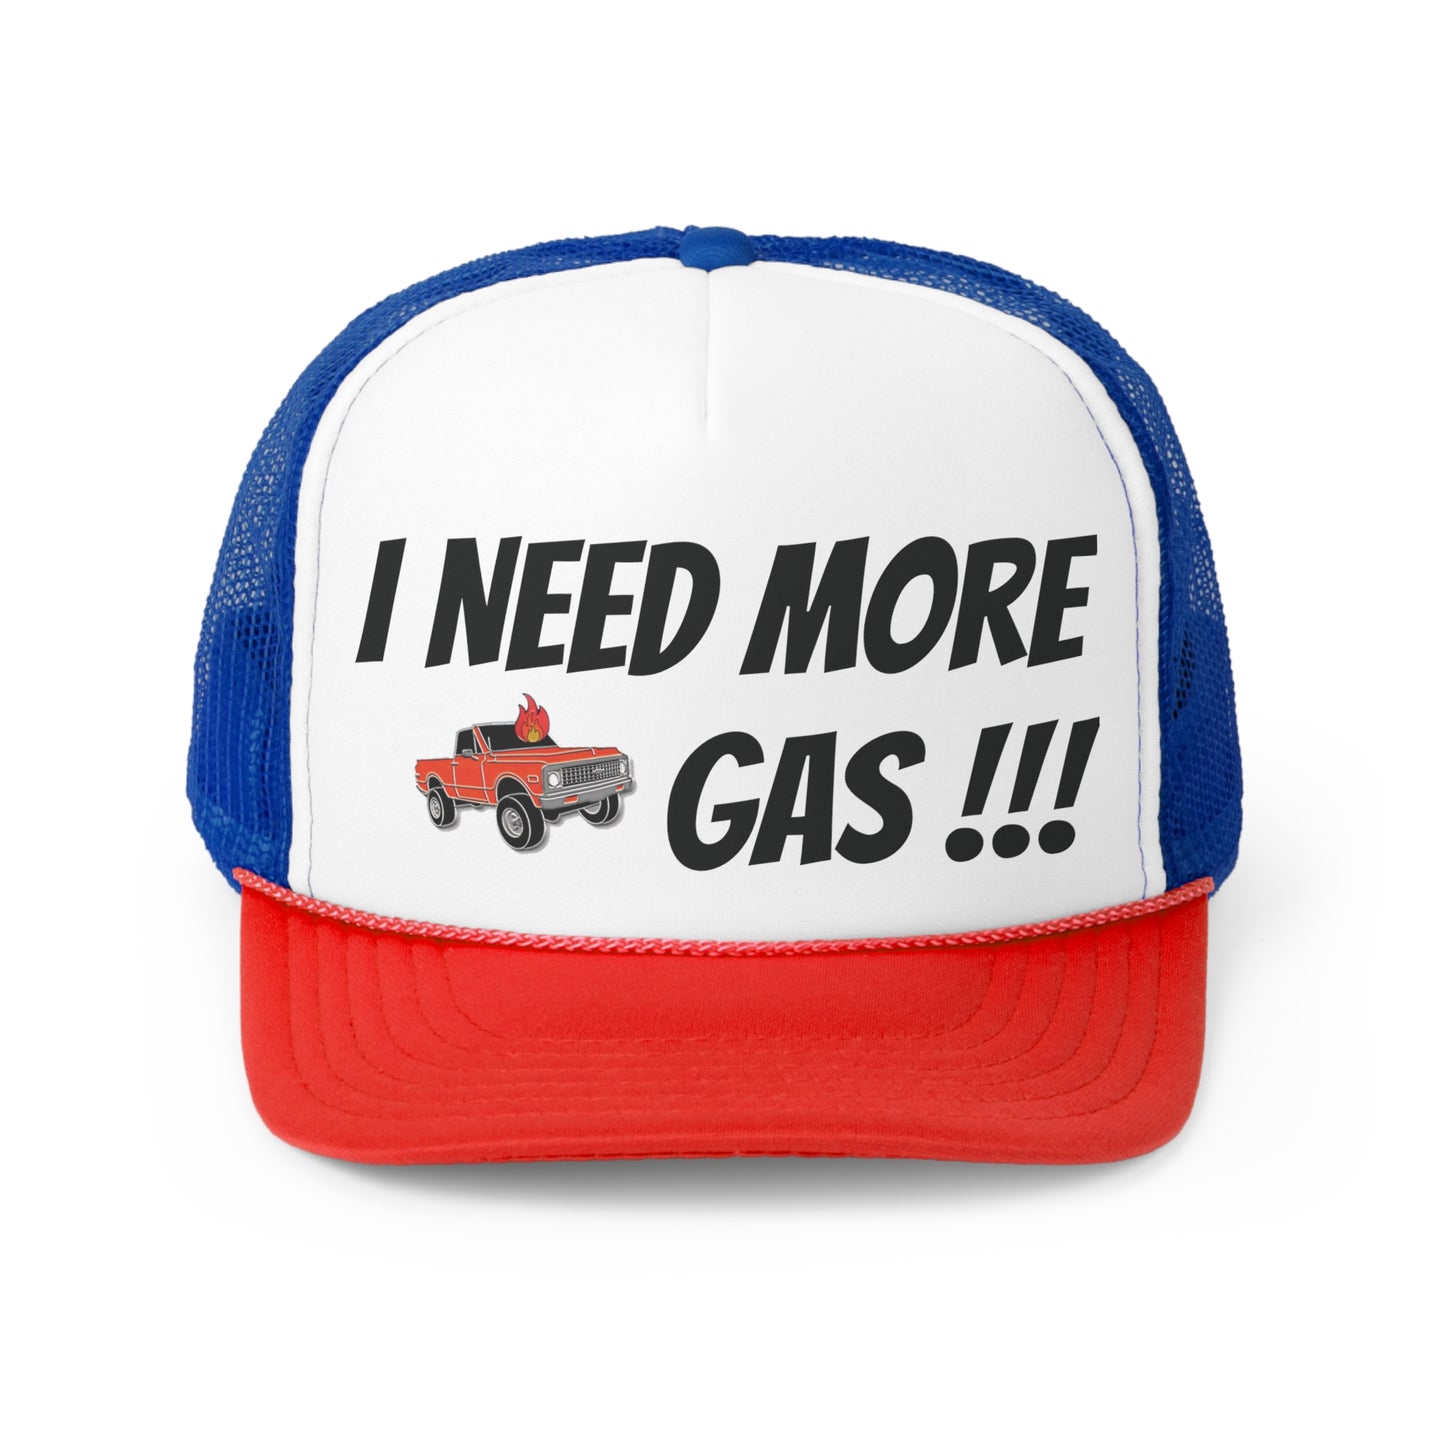 I Need More Gas !!! Trucker Cap